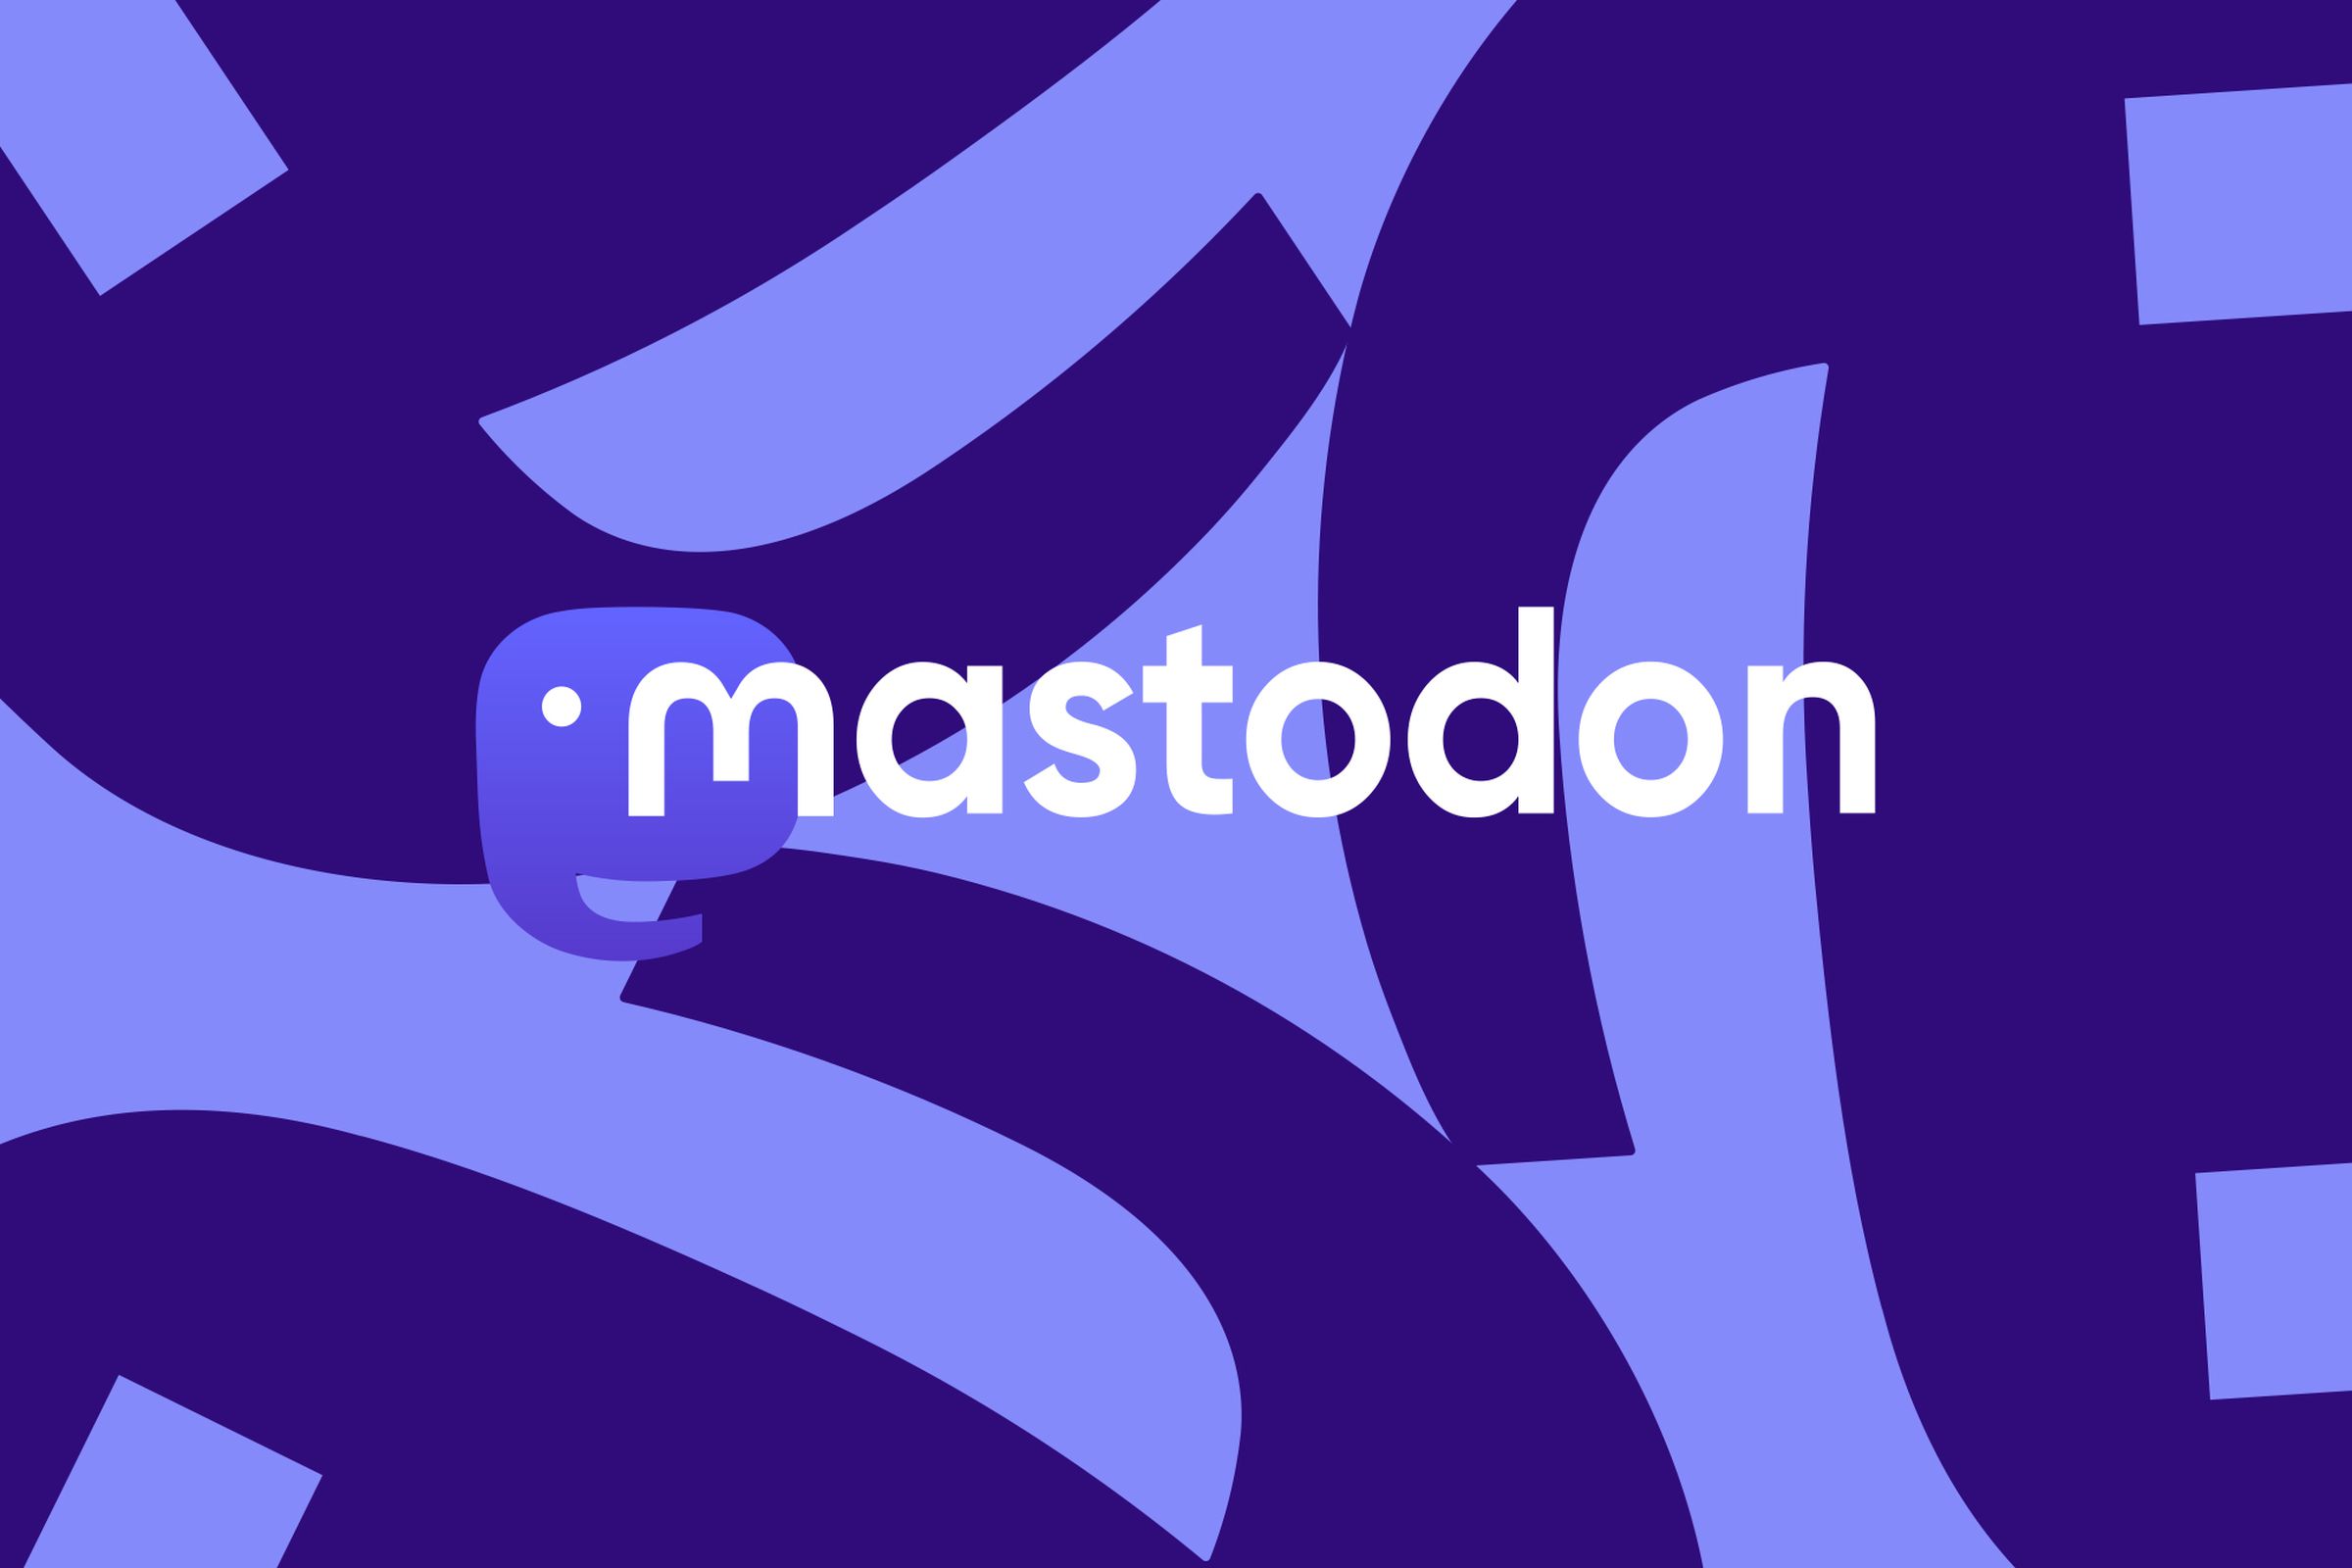 Illustration of the Mastodon logo.